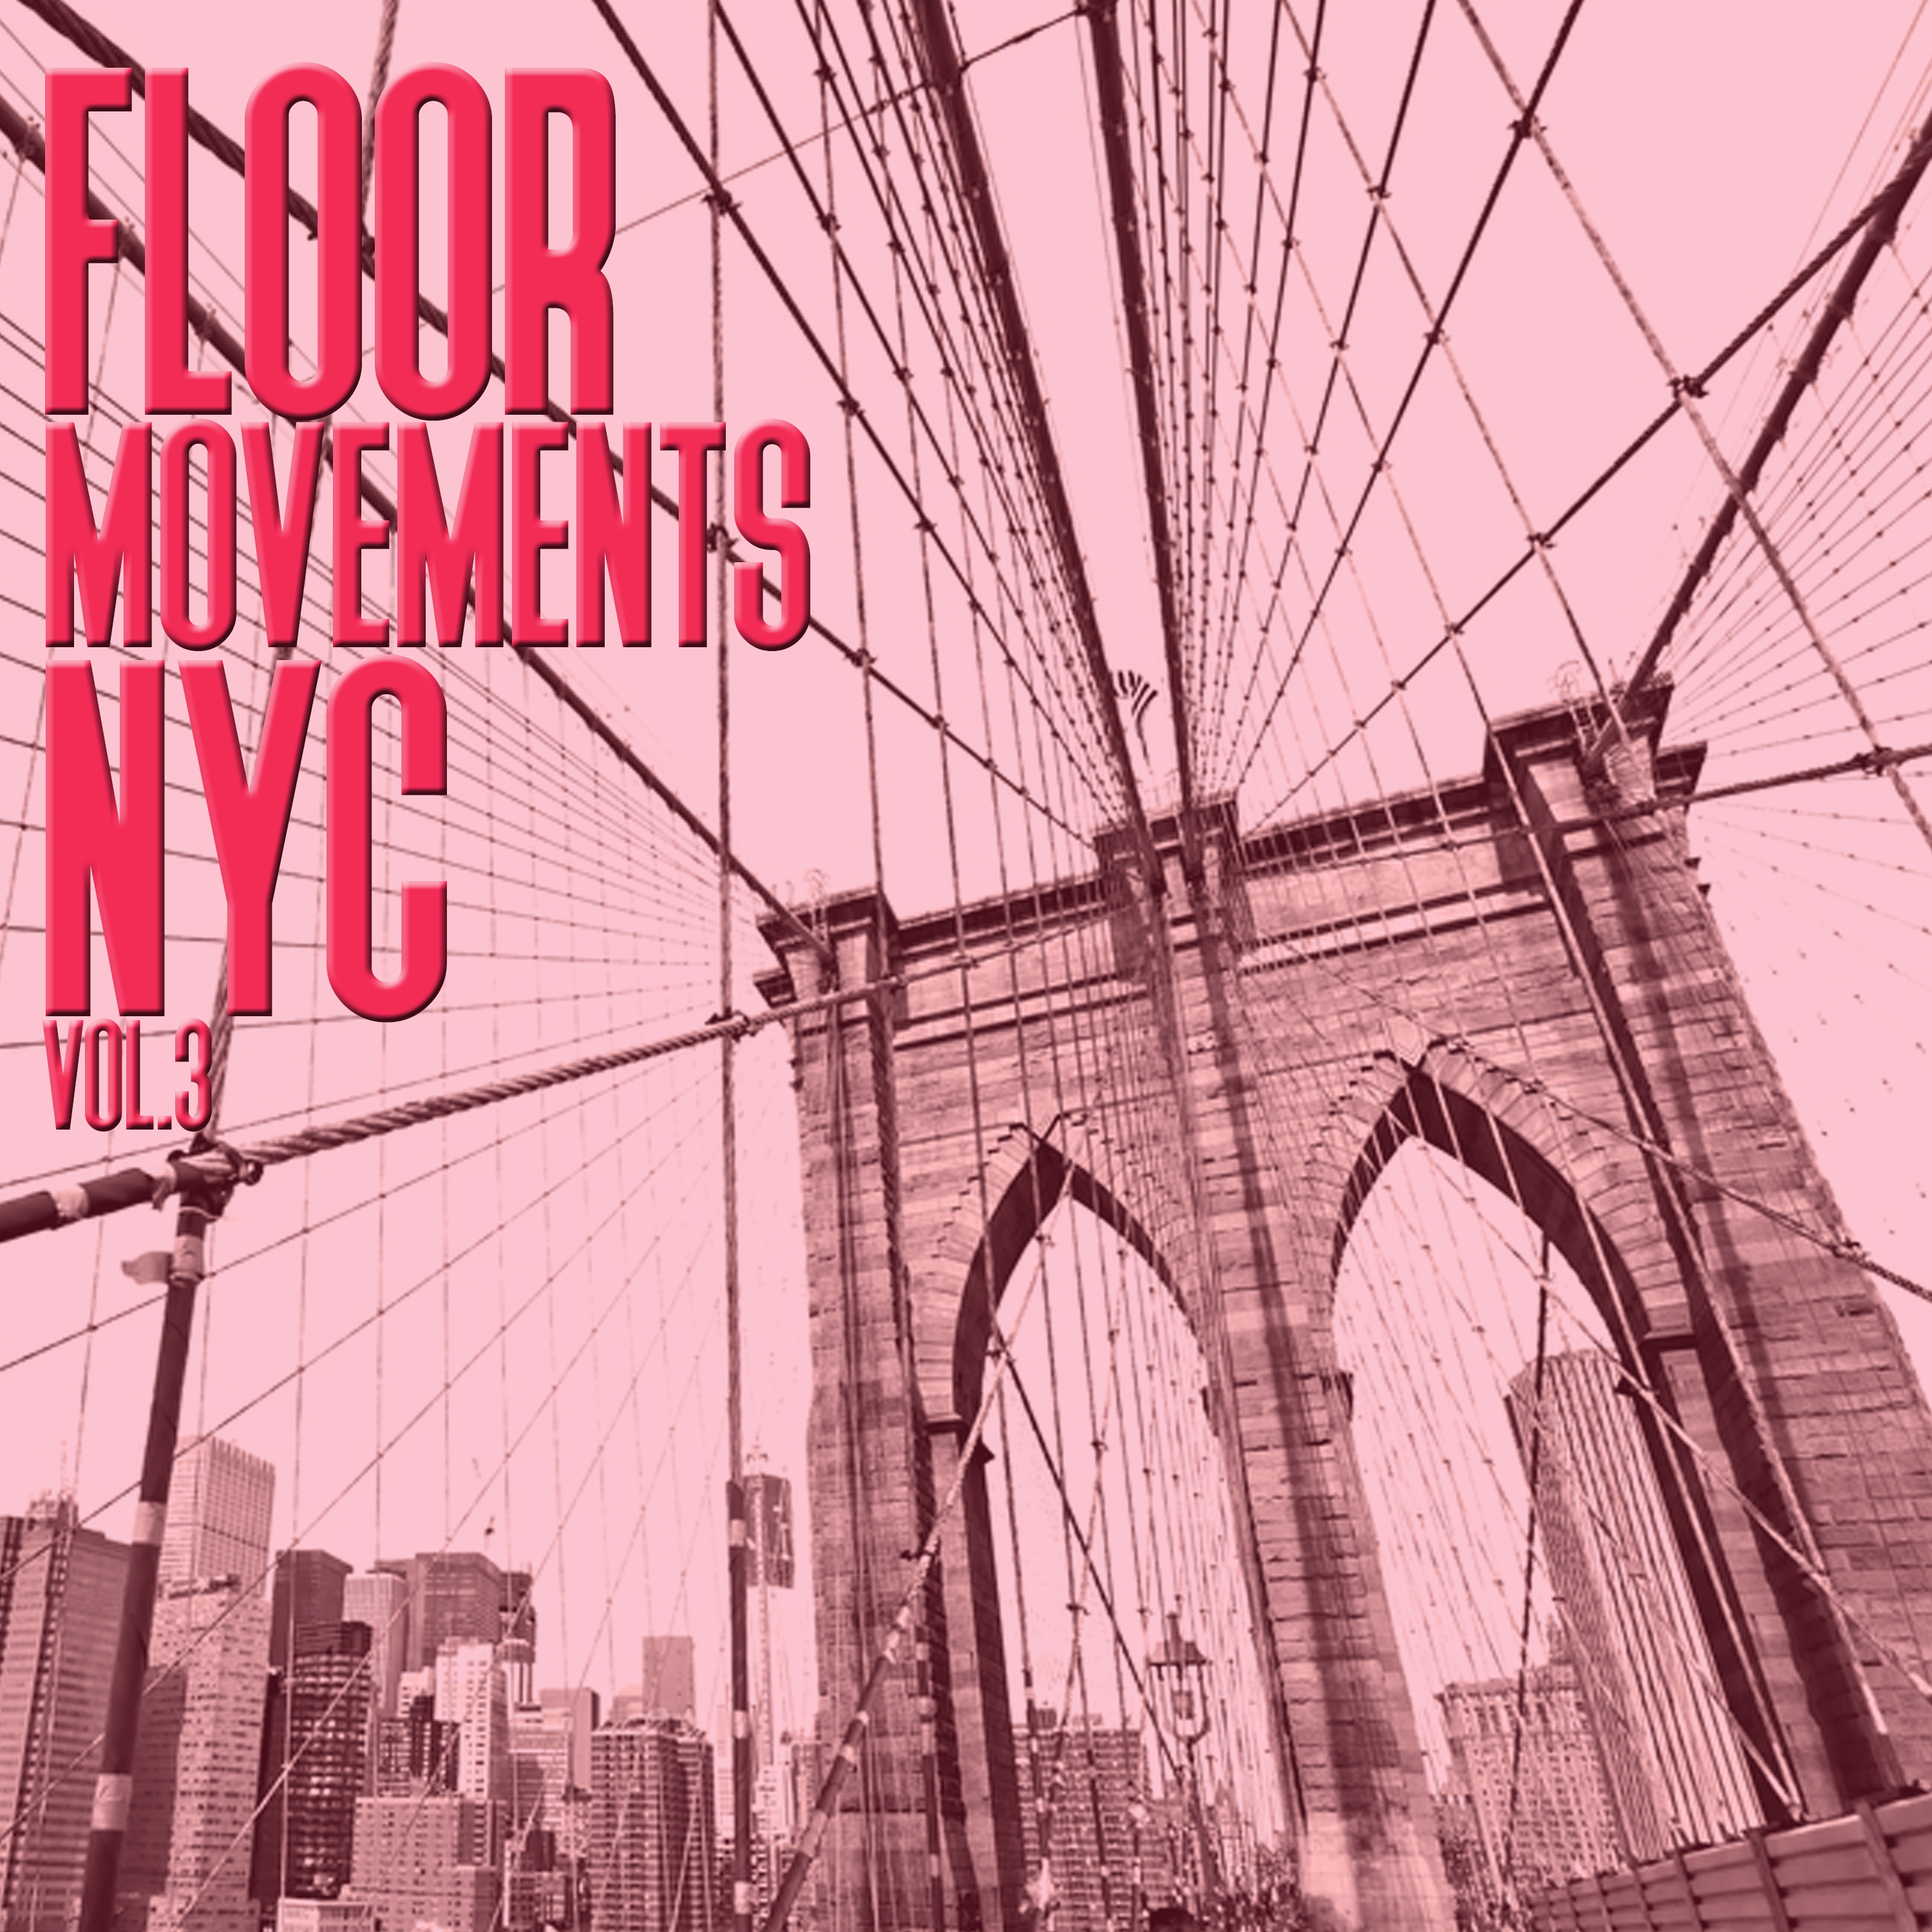 Floor Movements NYC, Vol. 3